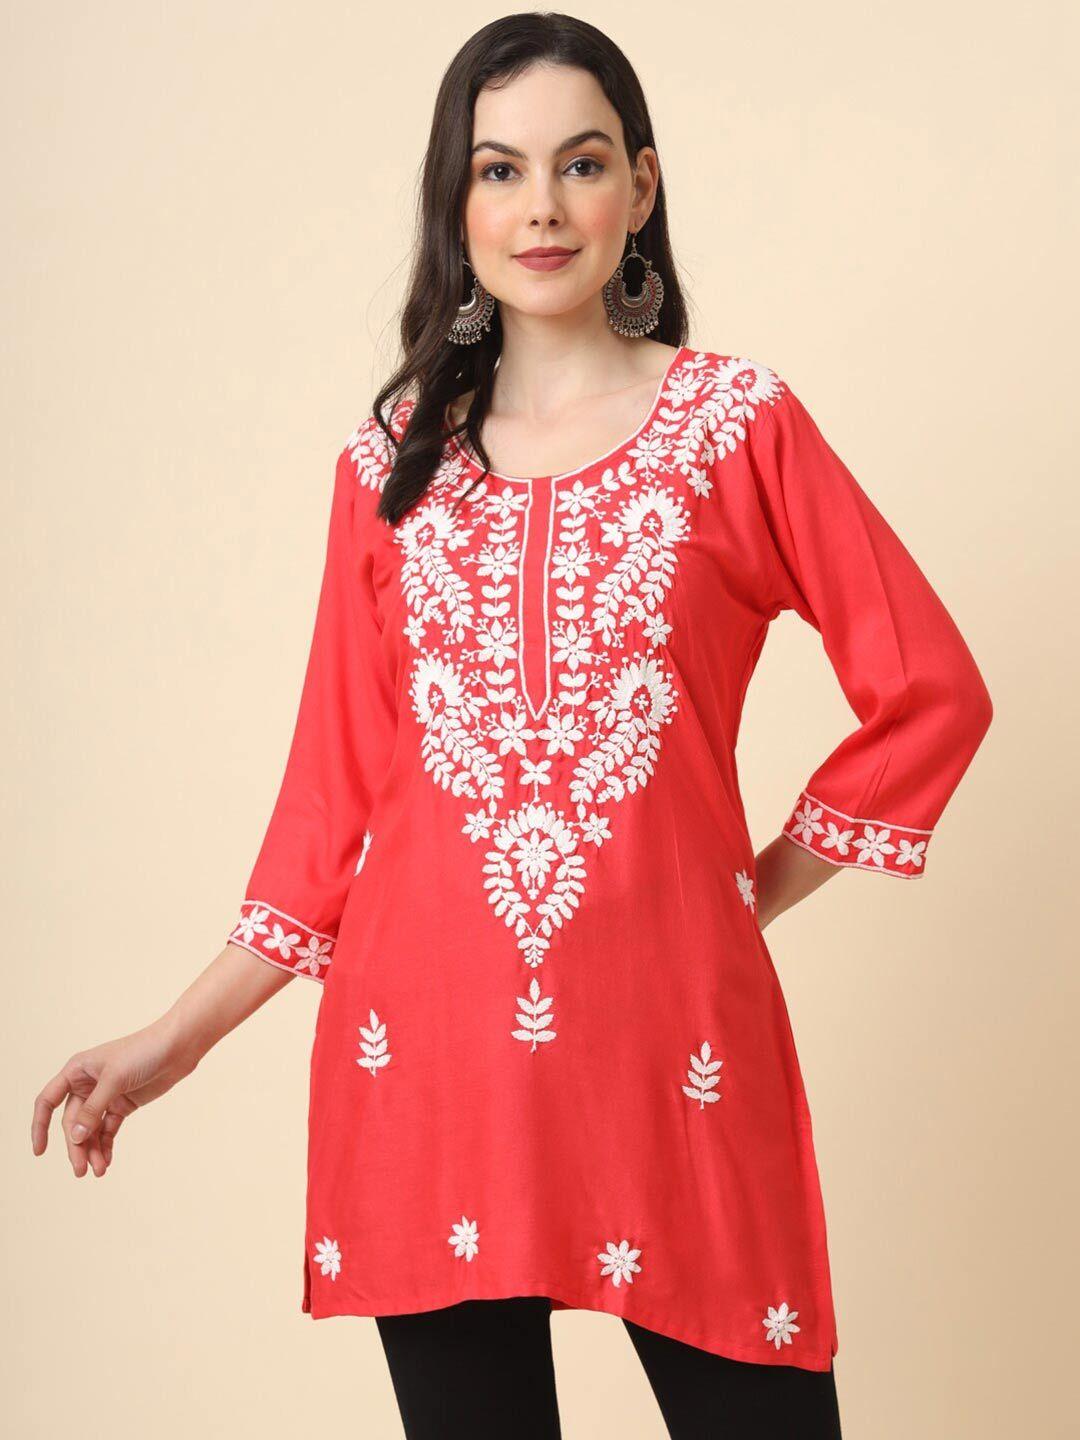 here&now-pink-&-white-ethnic-motifs-embroidered-round-neck-straight-kurti